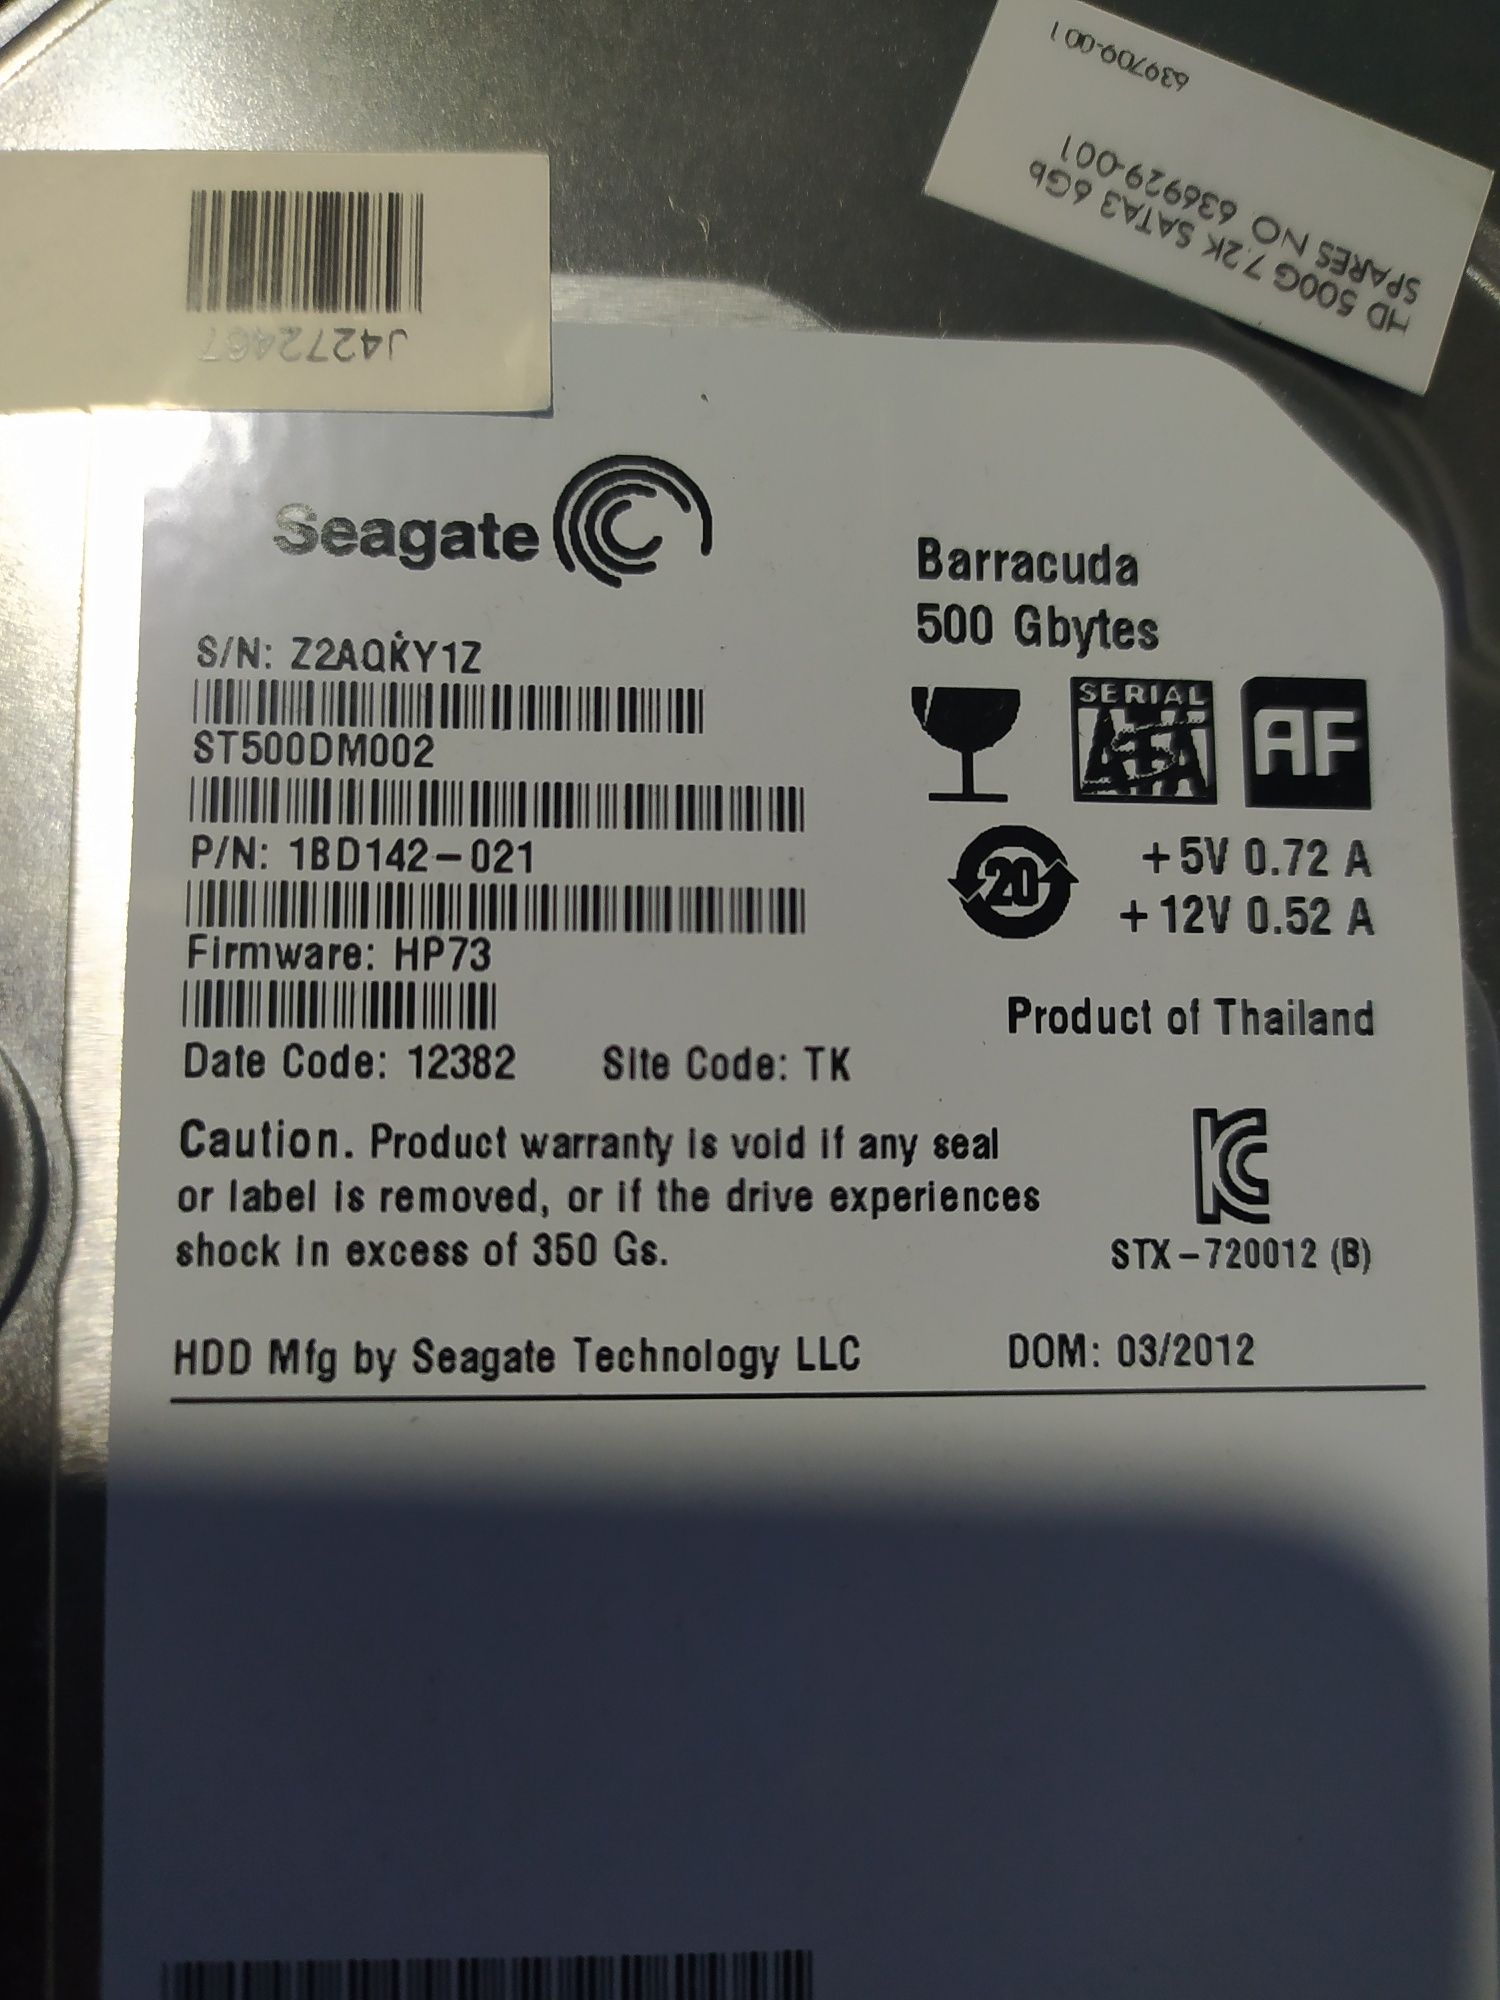 Seagate Barracuda 500 GB